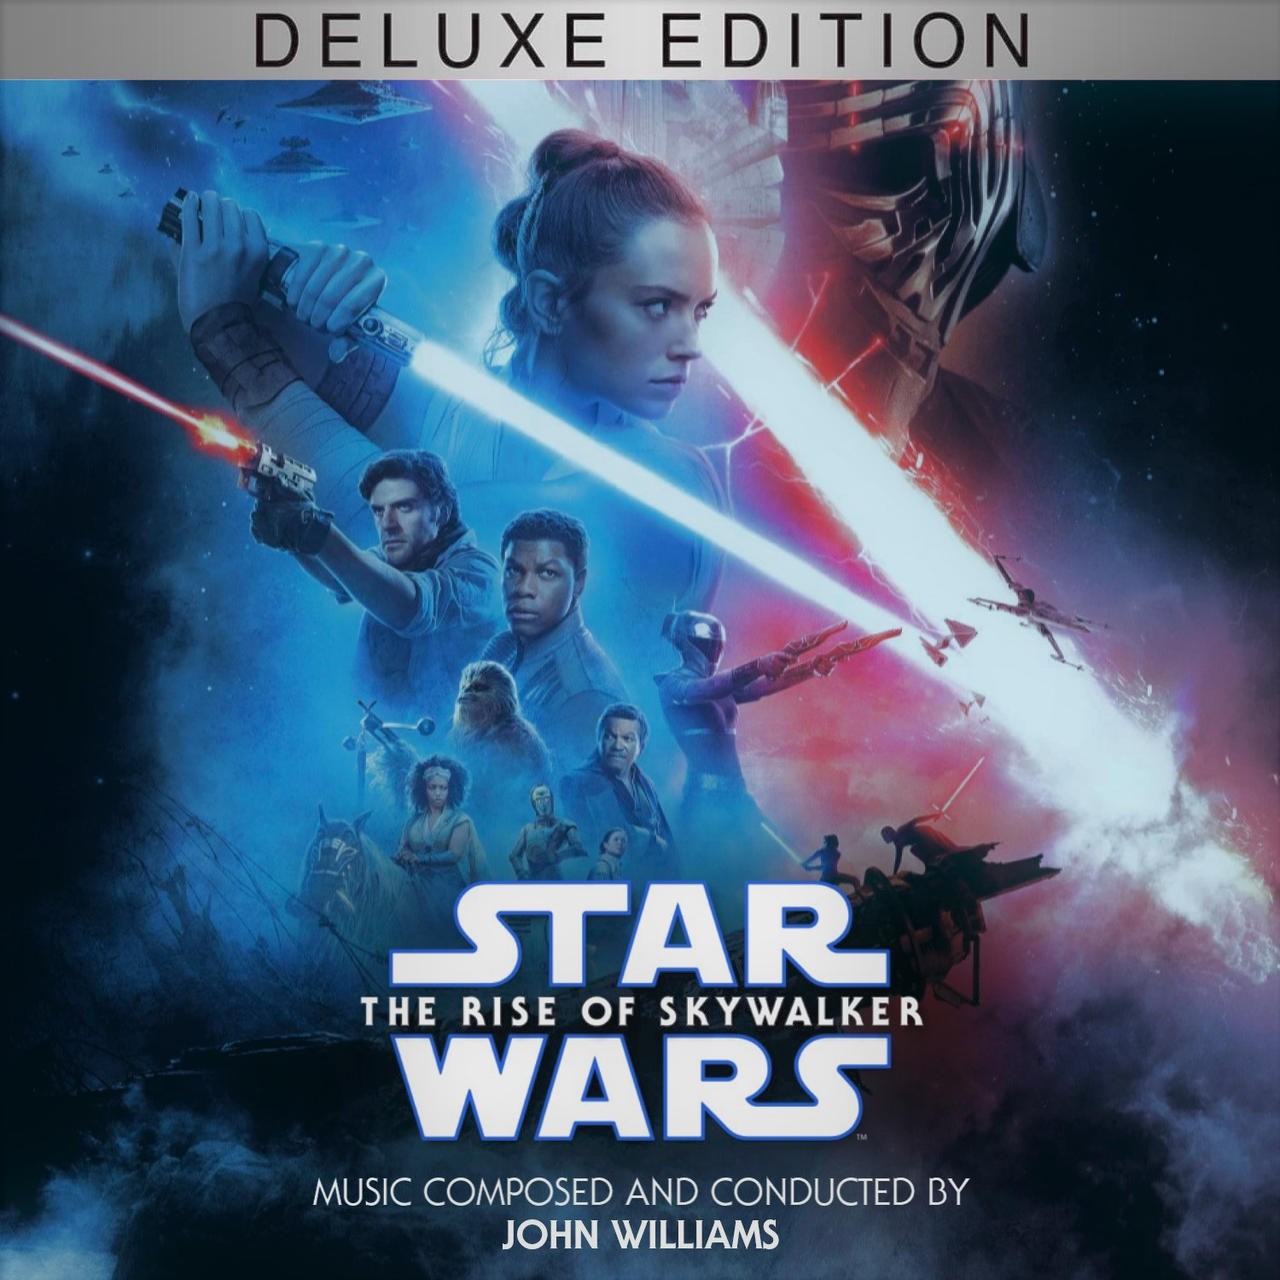 todo lo mejor mero ensayo Star Wars: The Rise of Skywalker - OST Deluxe by StJimmy2000 on DeviantArt